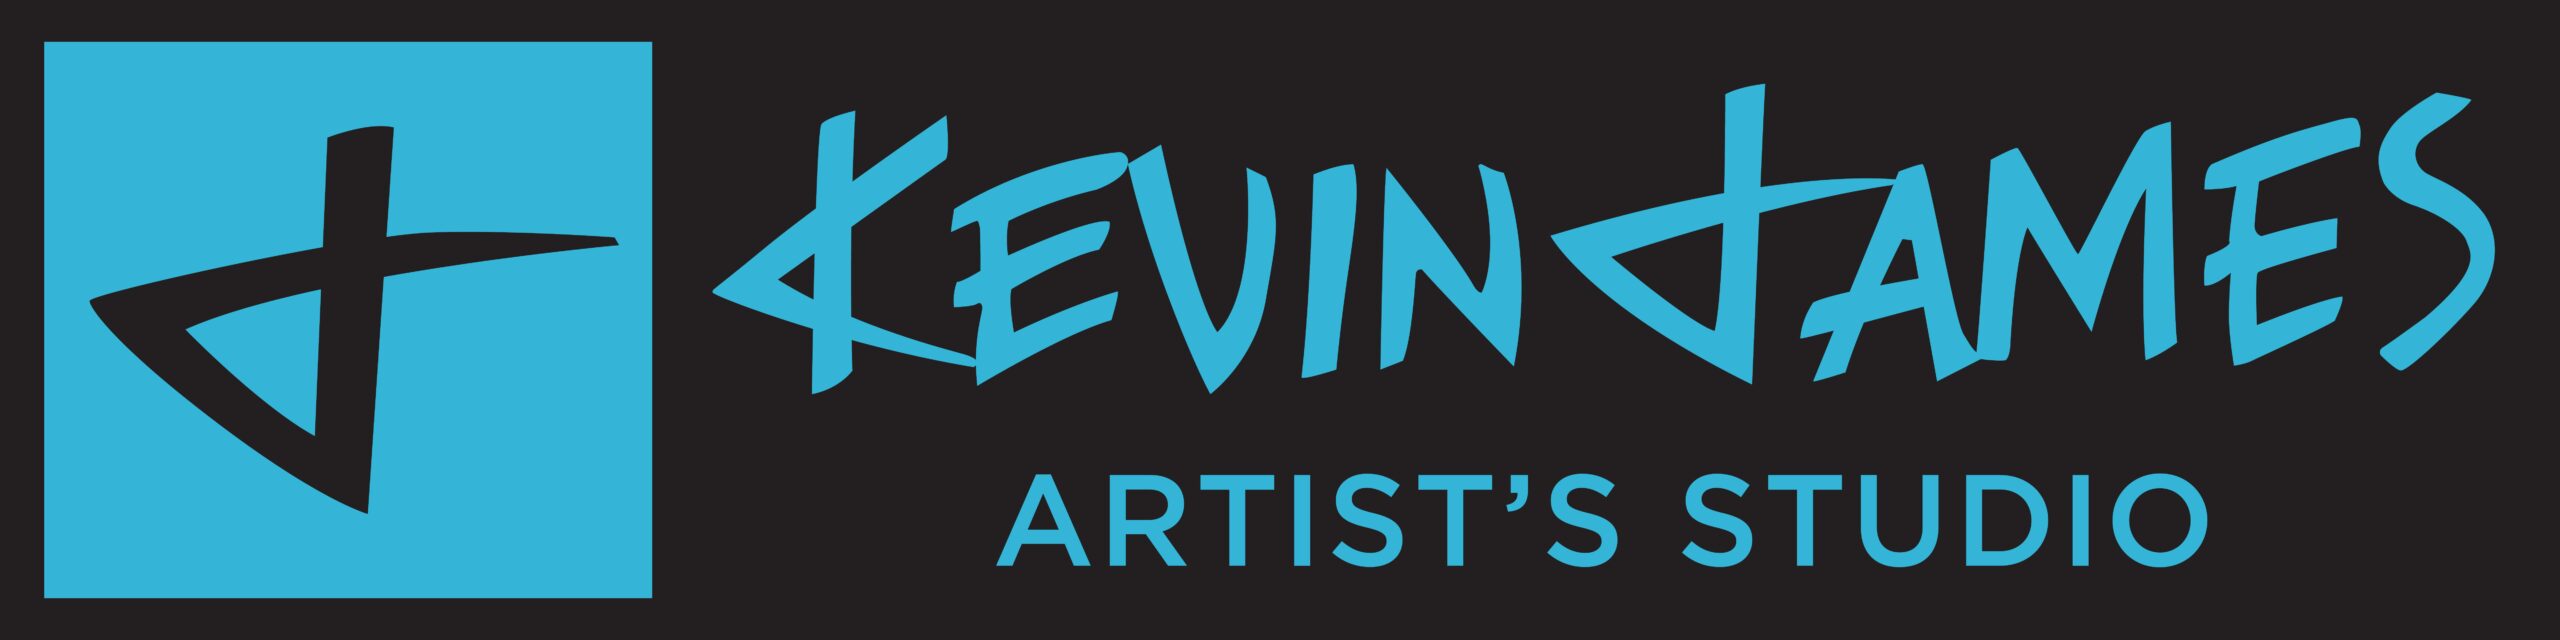 KEVIN JAMES/Artist’s Studio